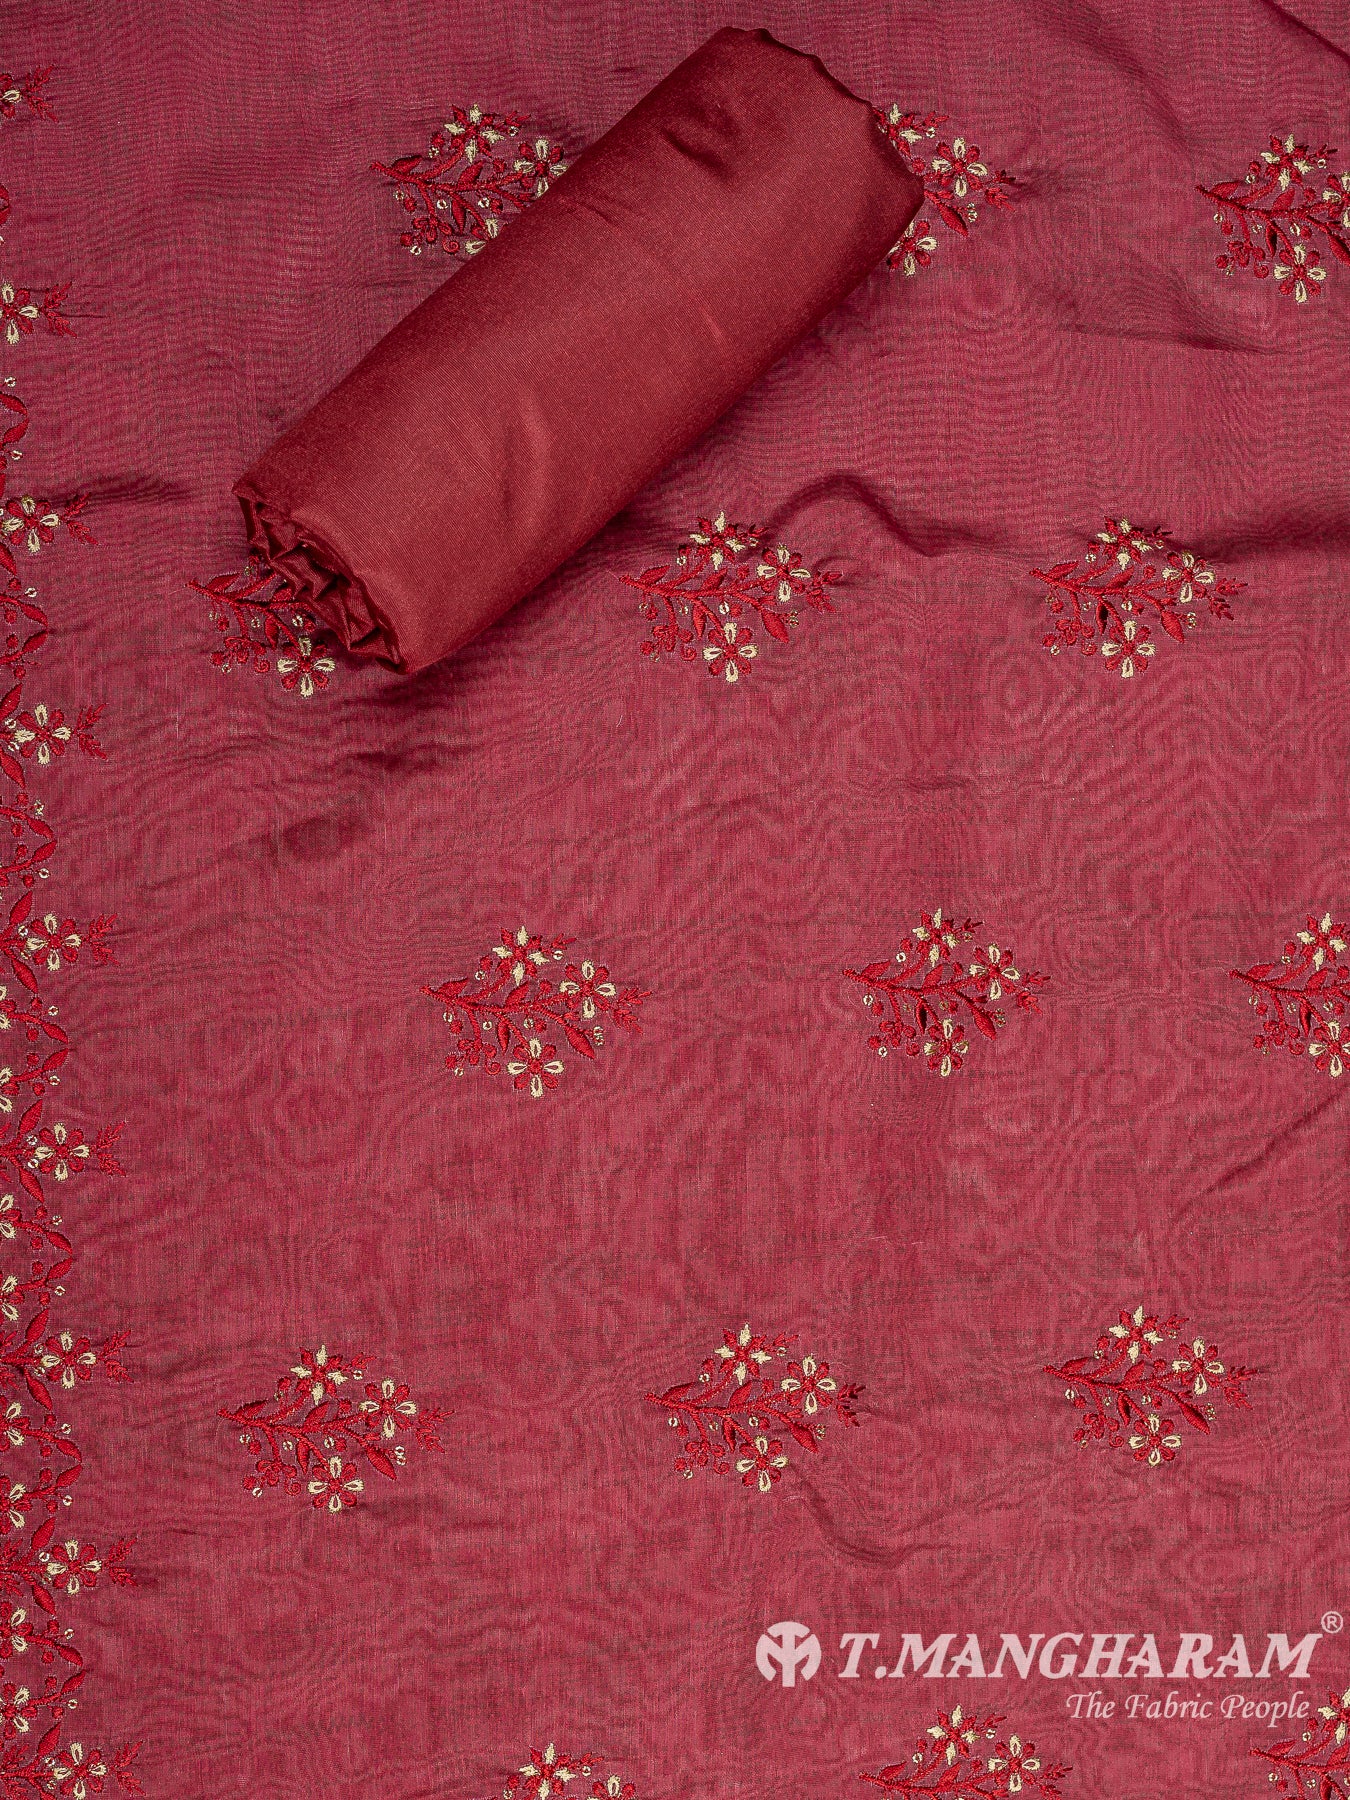 Maroon Silk Cotton Chudidhar Fabric Set - EG1837 view-2